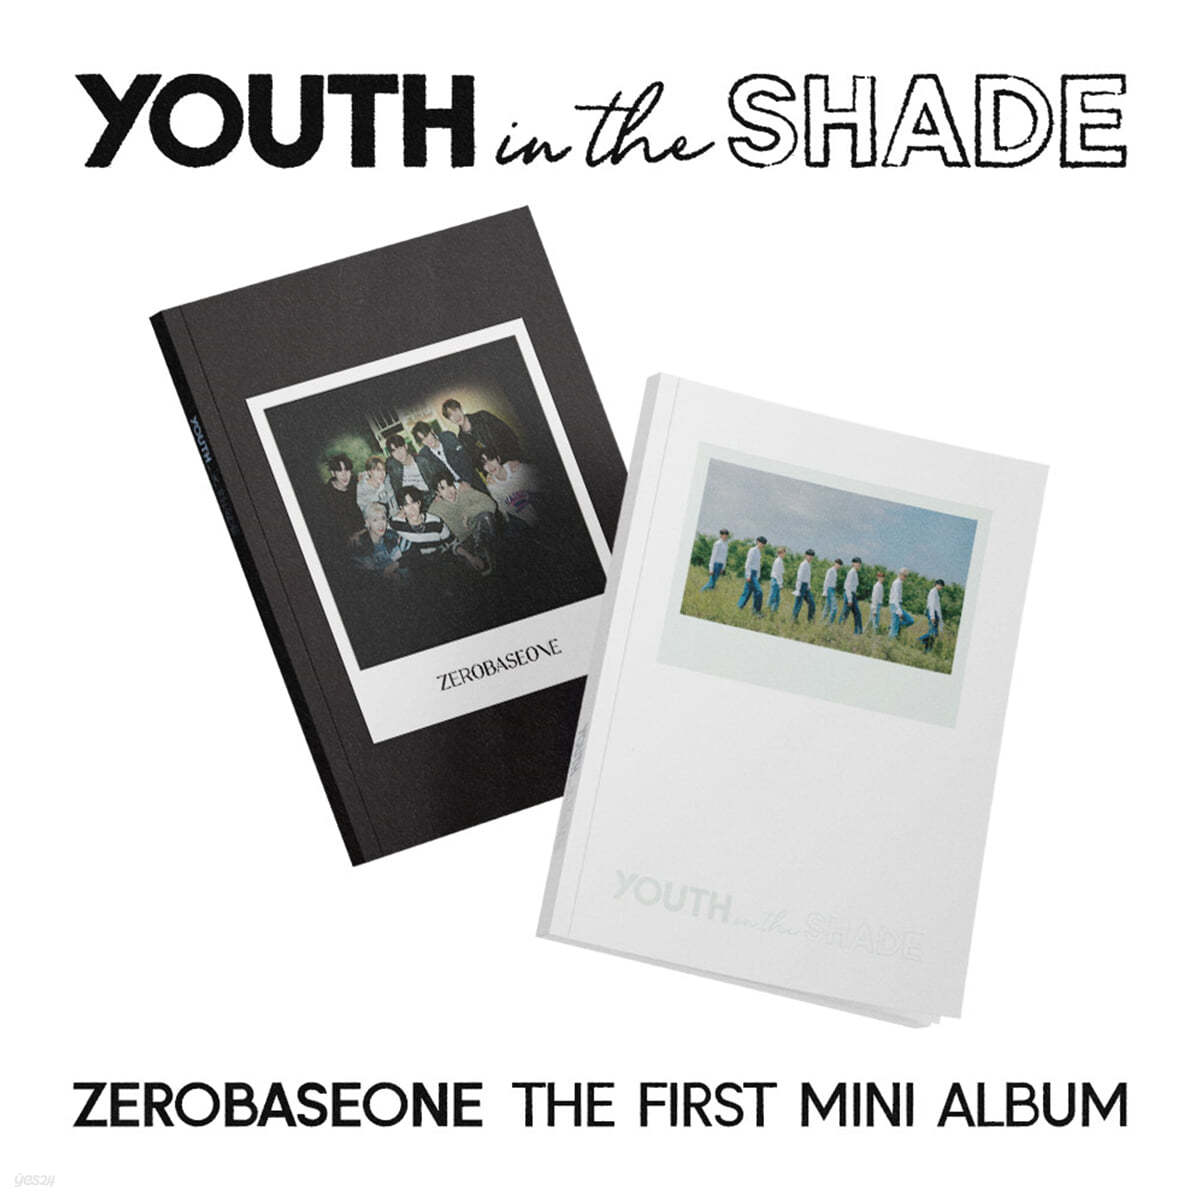 Zerobaseone - 1st Mini Album 'Youth in the shade'